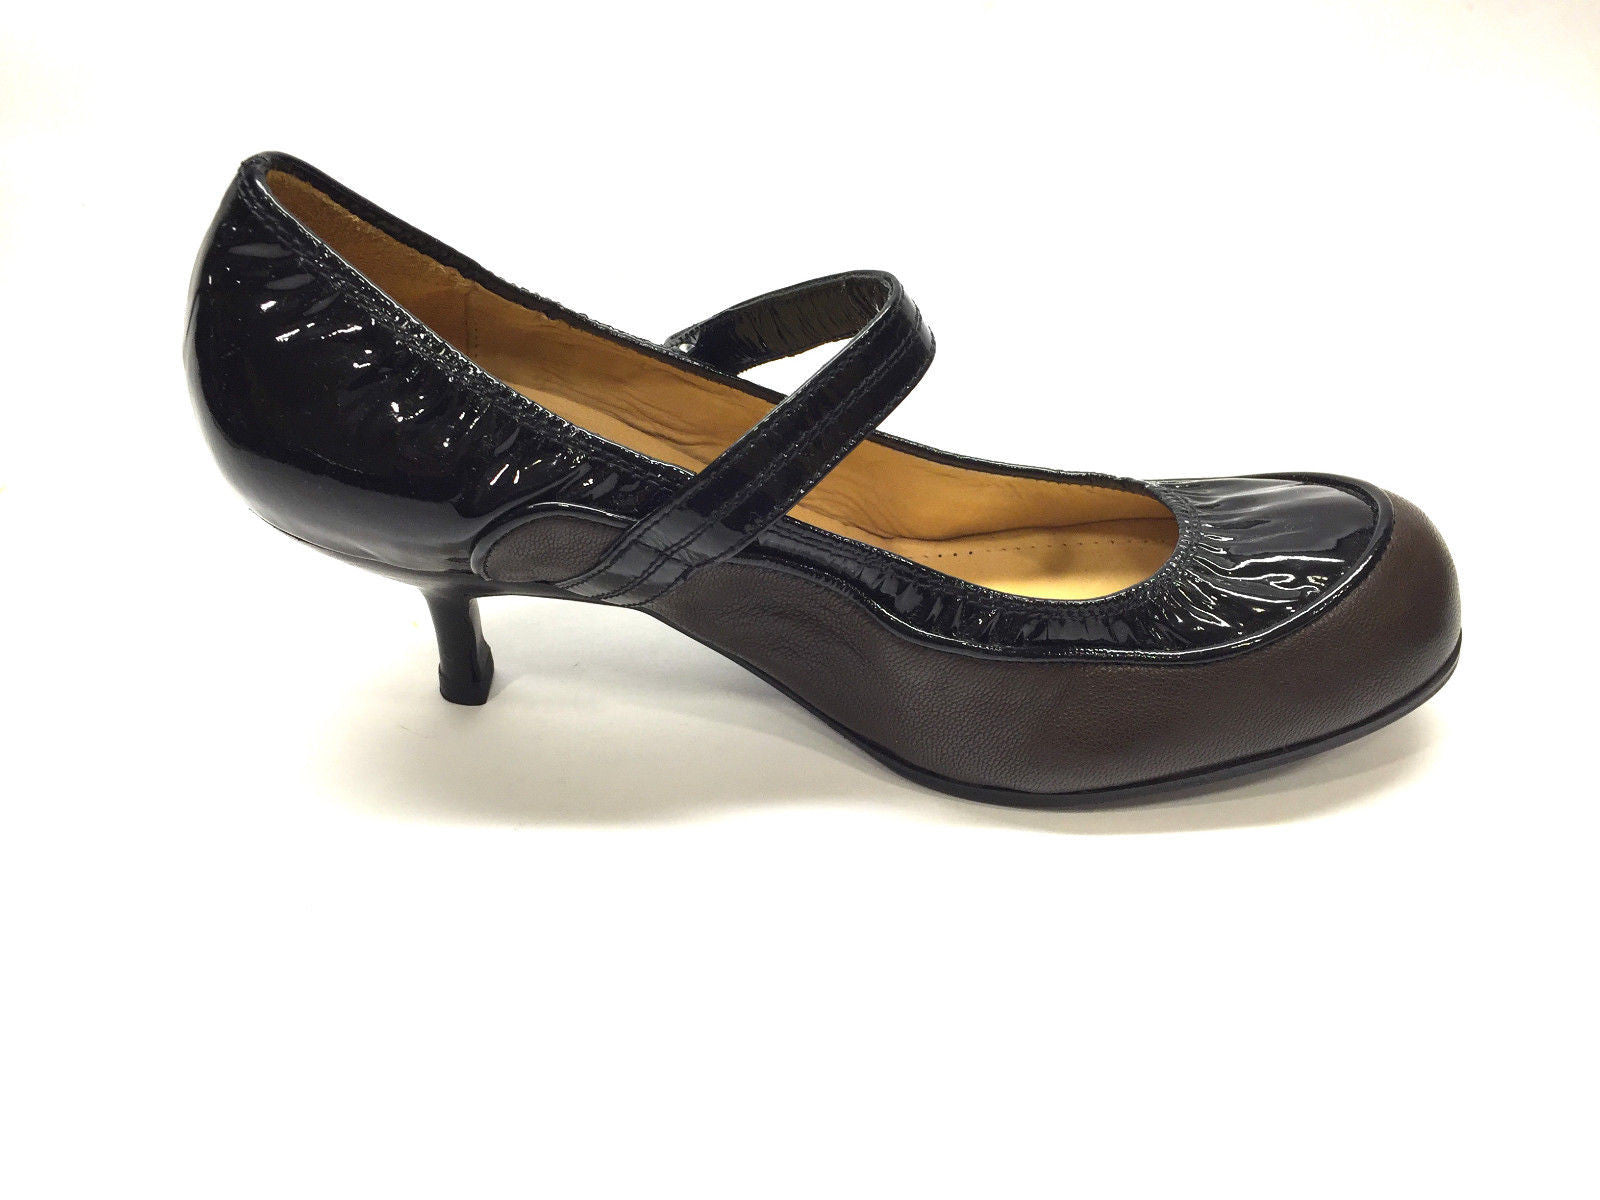 black patent leather kitten heel pumps